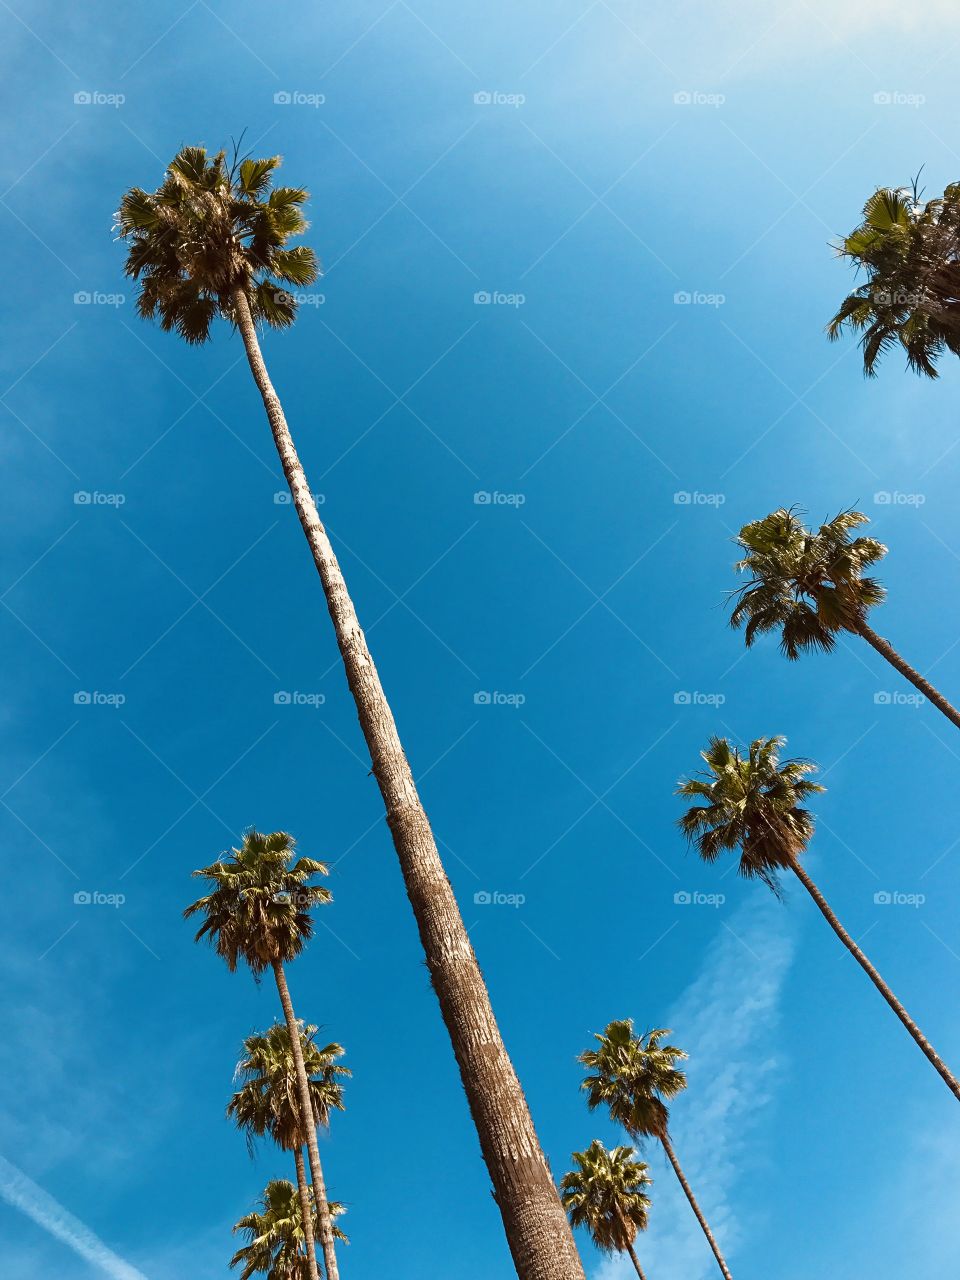 Los Angeles palm trees 